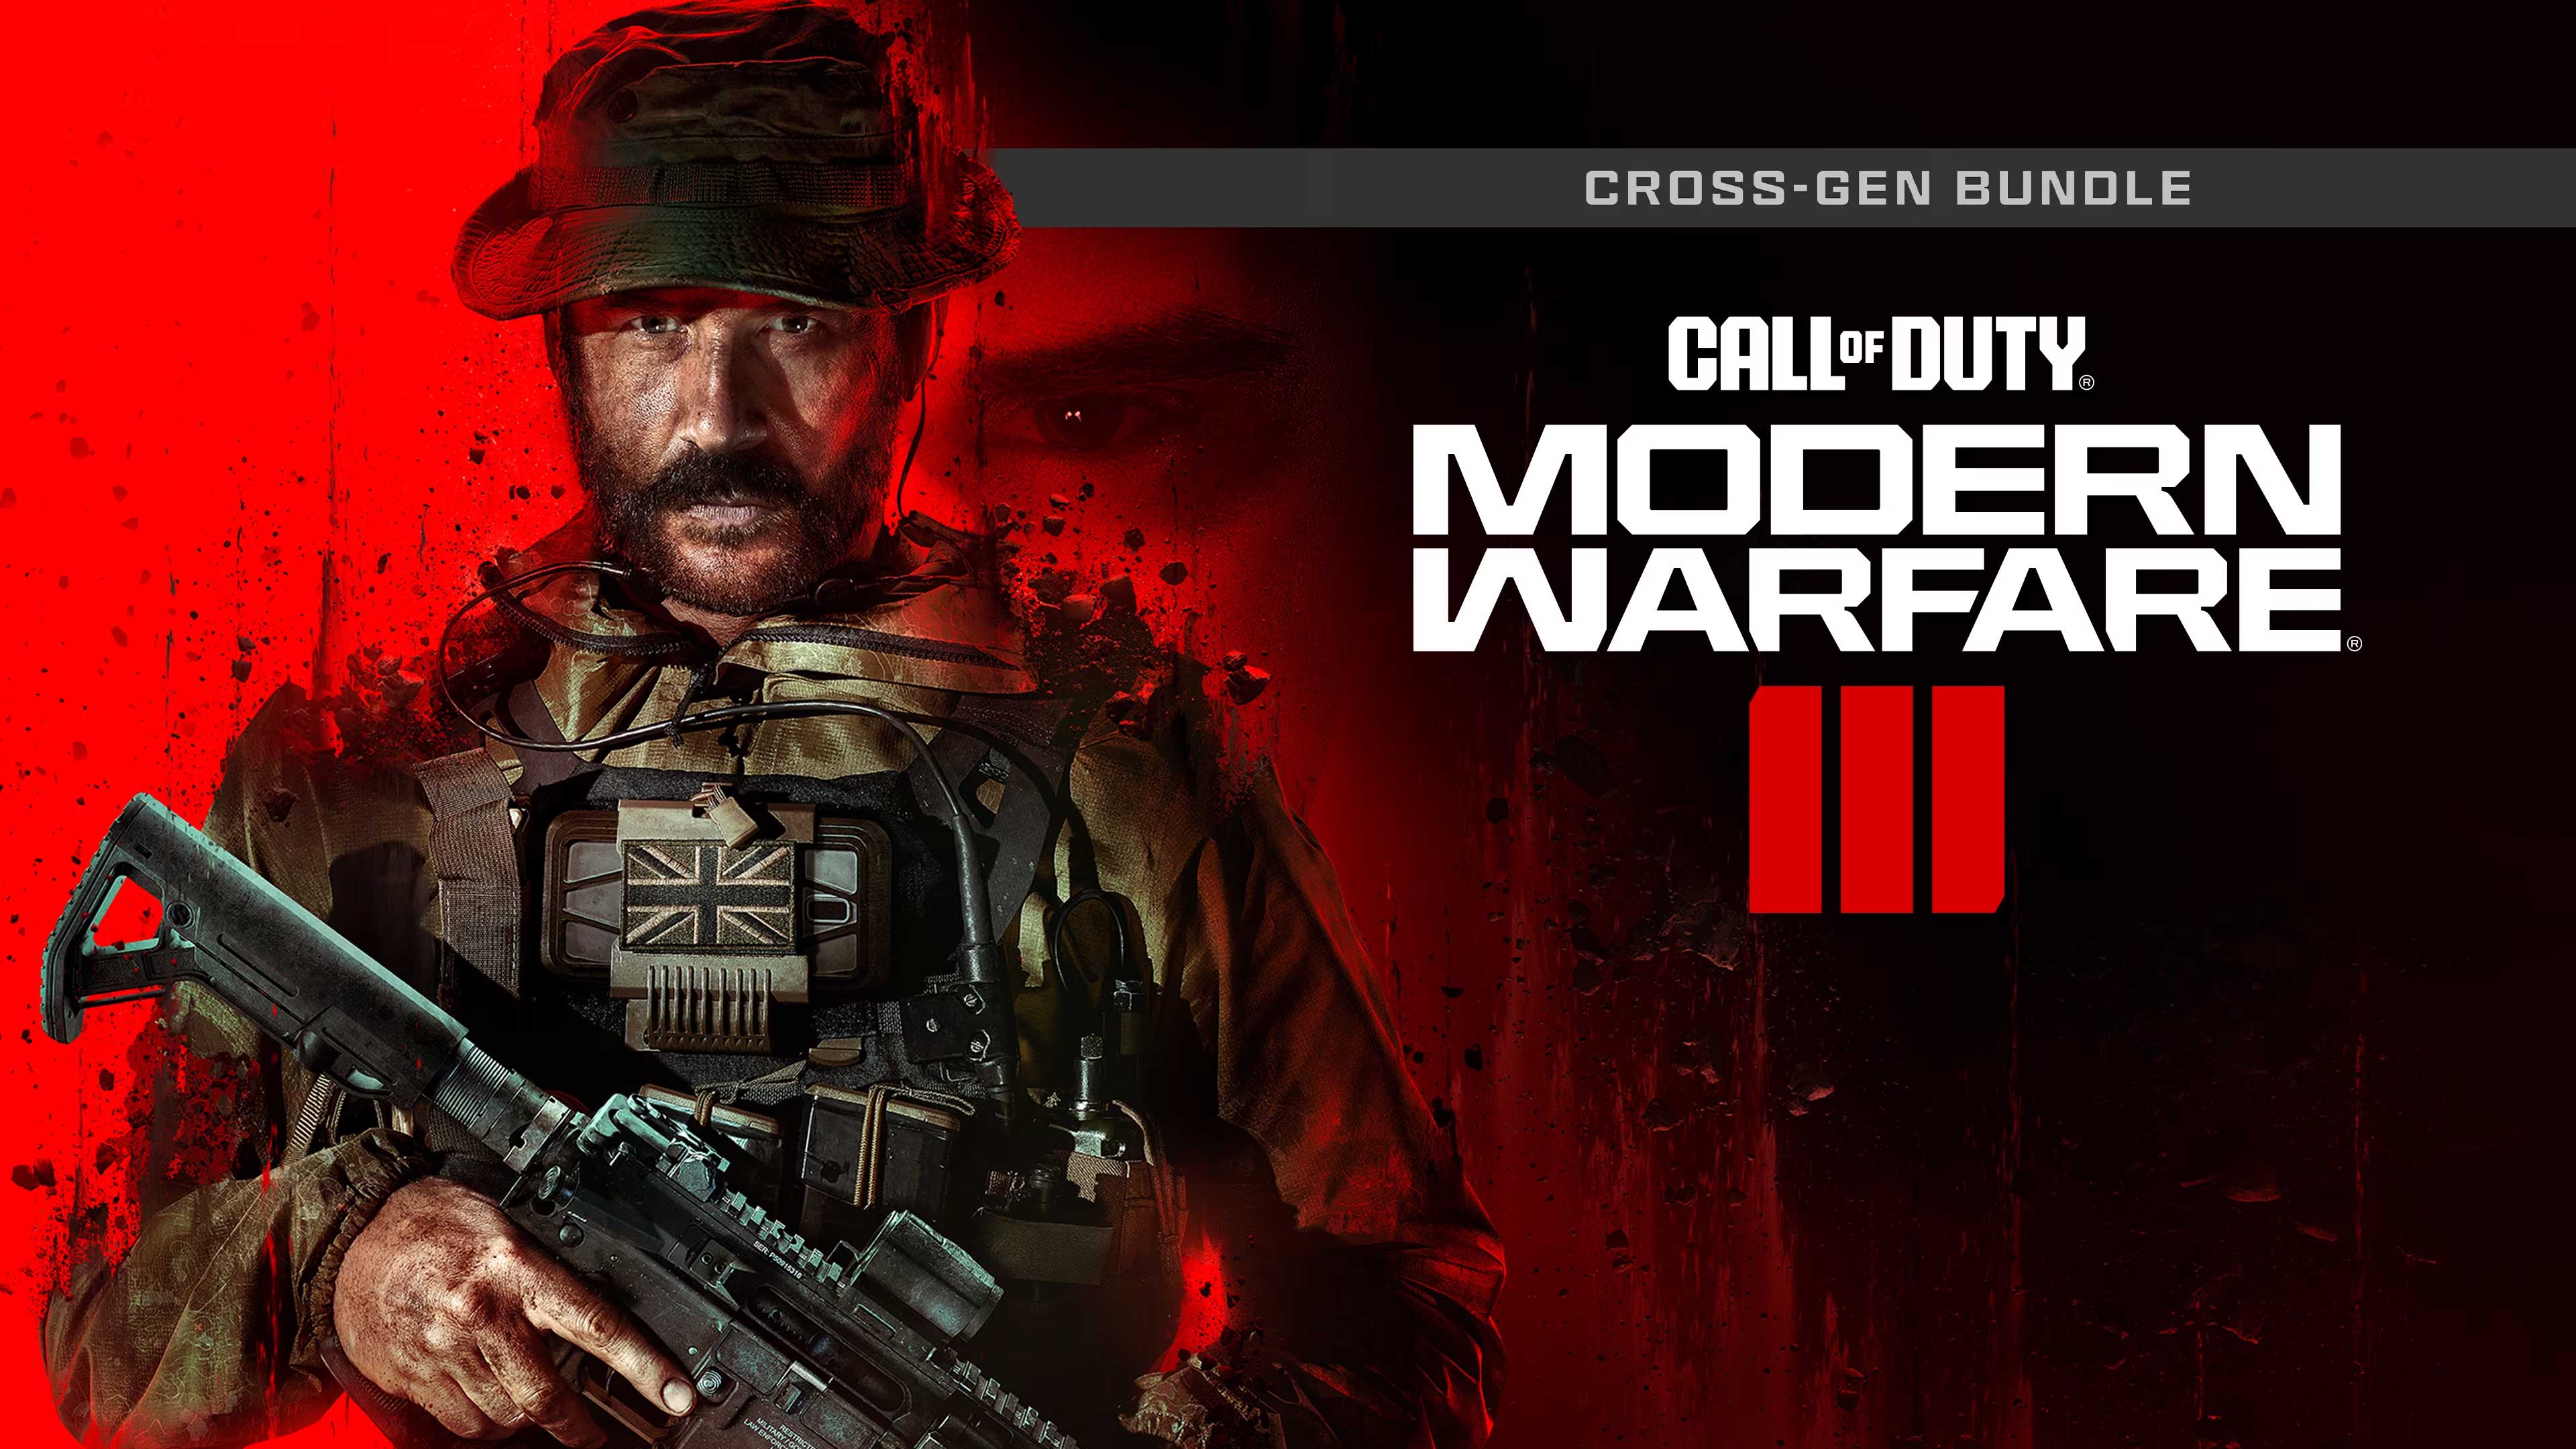 Call of Duty: Modern Warfare III - Cross-Gen Bundle, Core of a Game, coreofagame.com